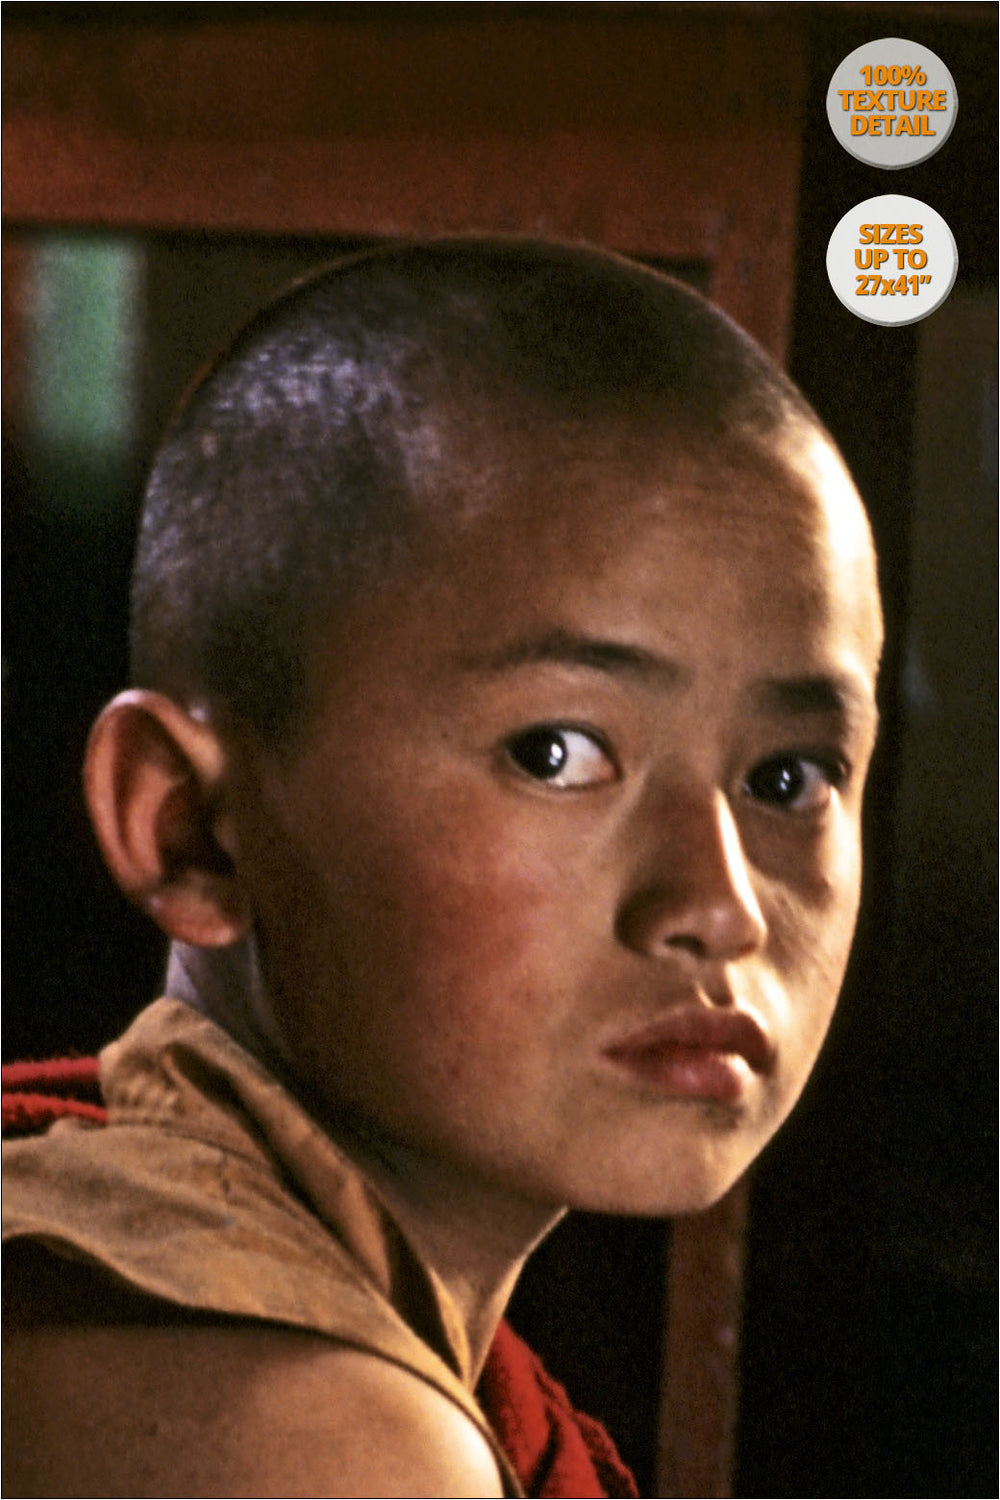 Monk Child doing homework, Swayambunath, Kathmandu. | 100% Magnification Detail.